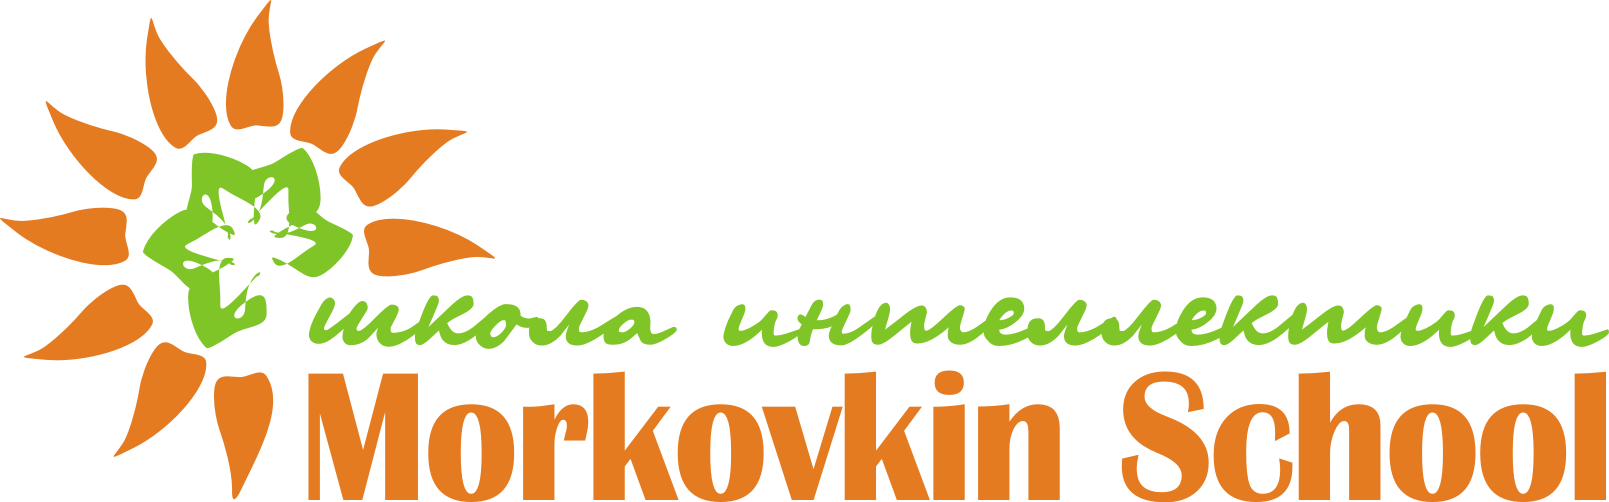 Морковкин сад Оренбург. Шаблон для логотипа Морковкин сад.